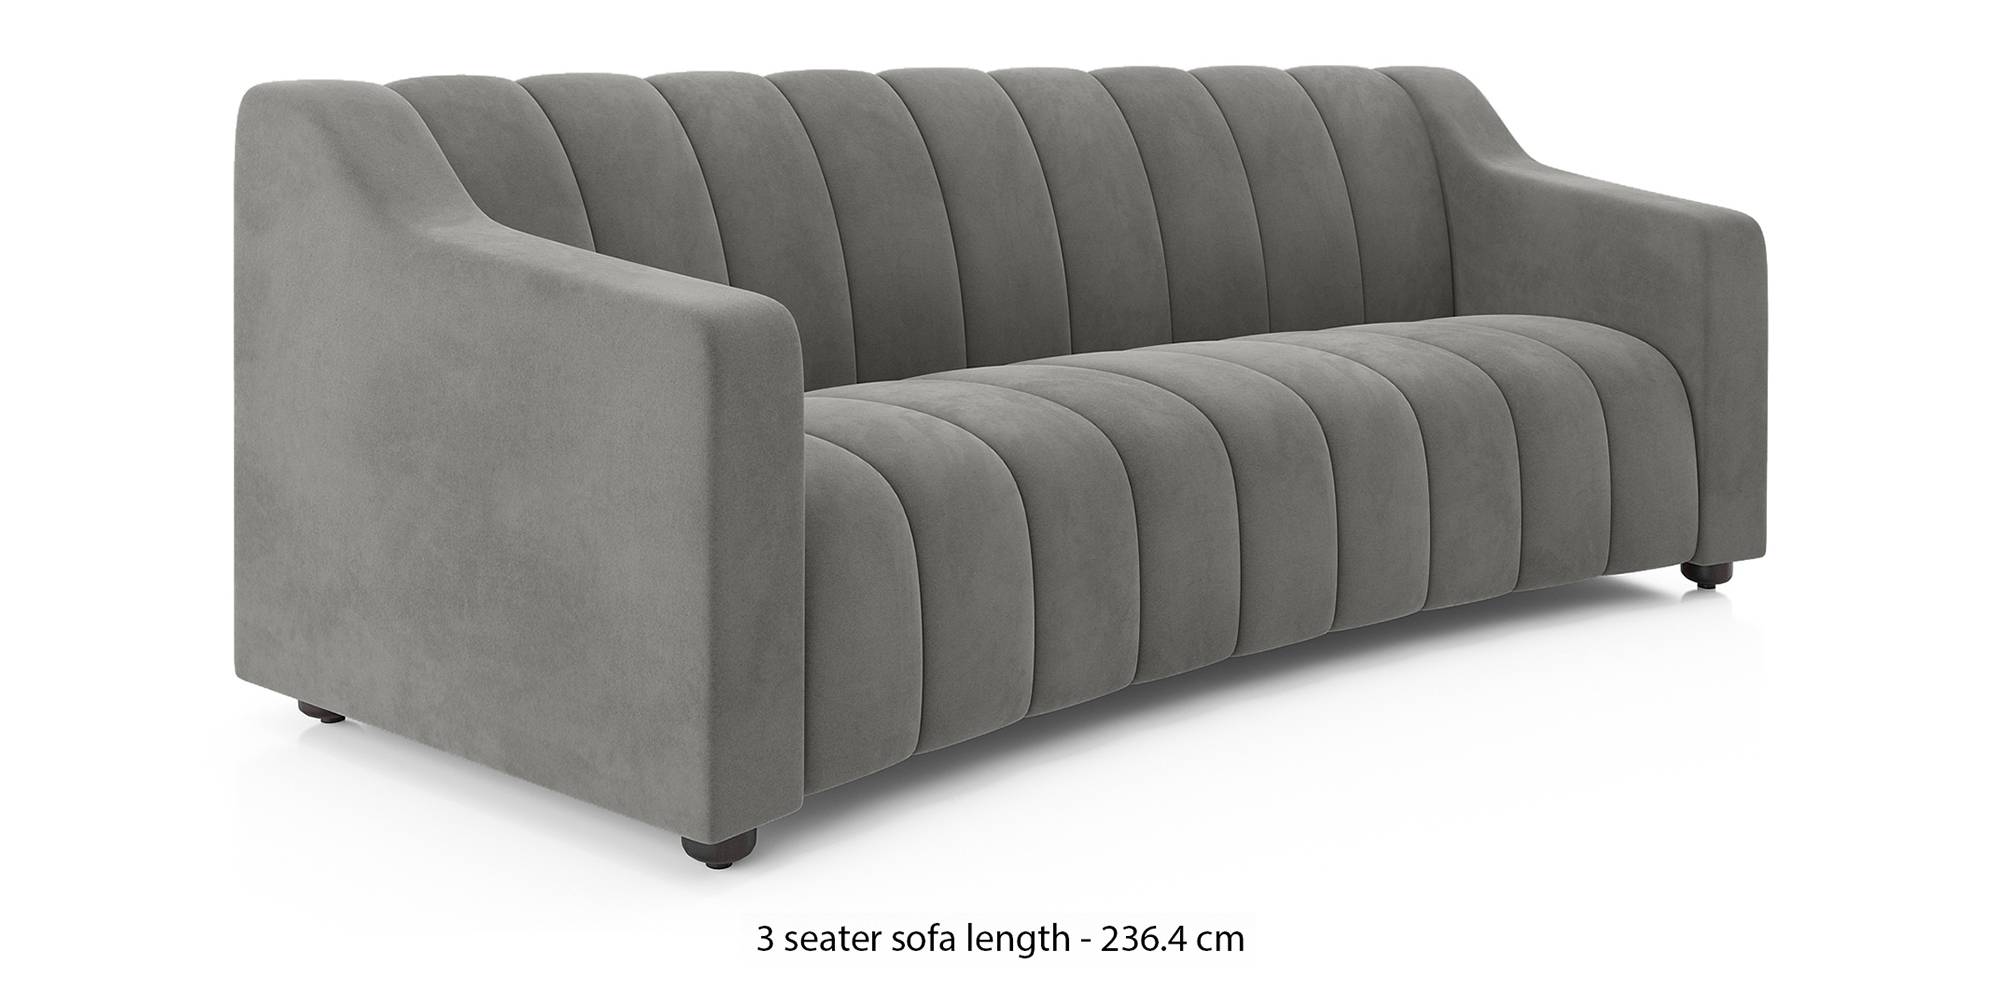 Sienna Curved Fabric Sofa (Ash Grey) (3-seater Custom Set - Sofas, None Standard Set - Sofas, Fabric Sofa Material, Regular Sofa Size, Regular Sofa Type, Ash Grey Velvet) by Urban Ladder - - 873142